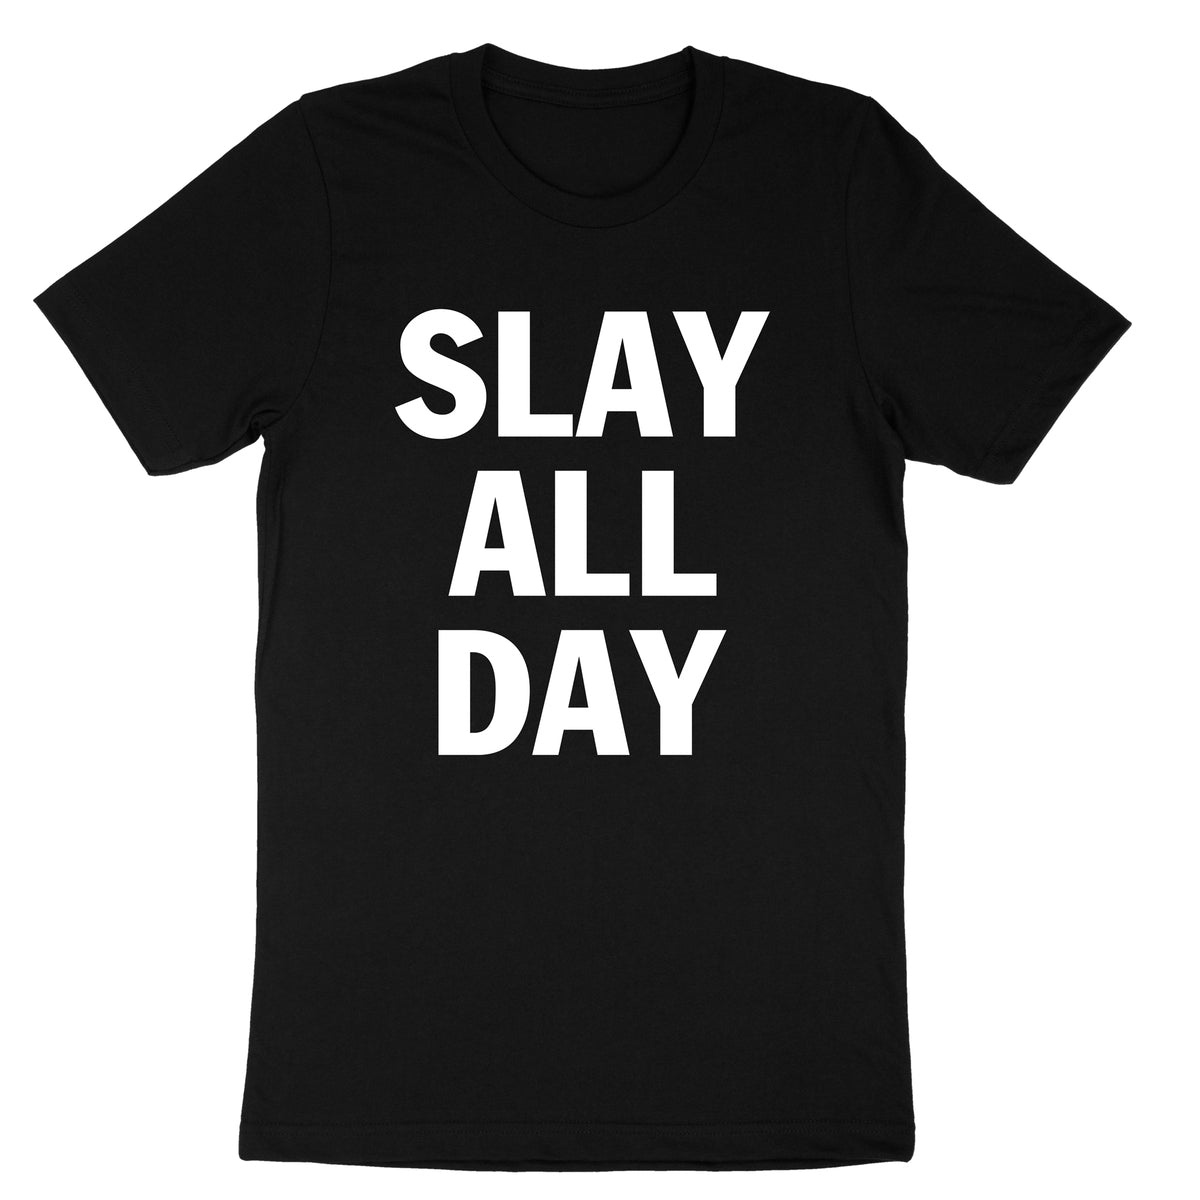 "Slay all day" Black T-shirt